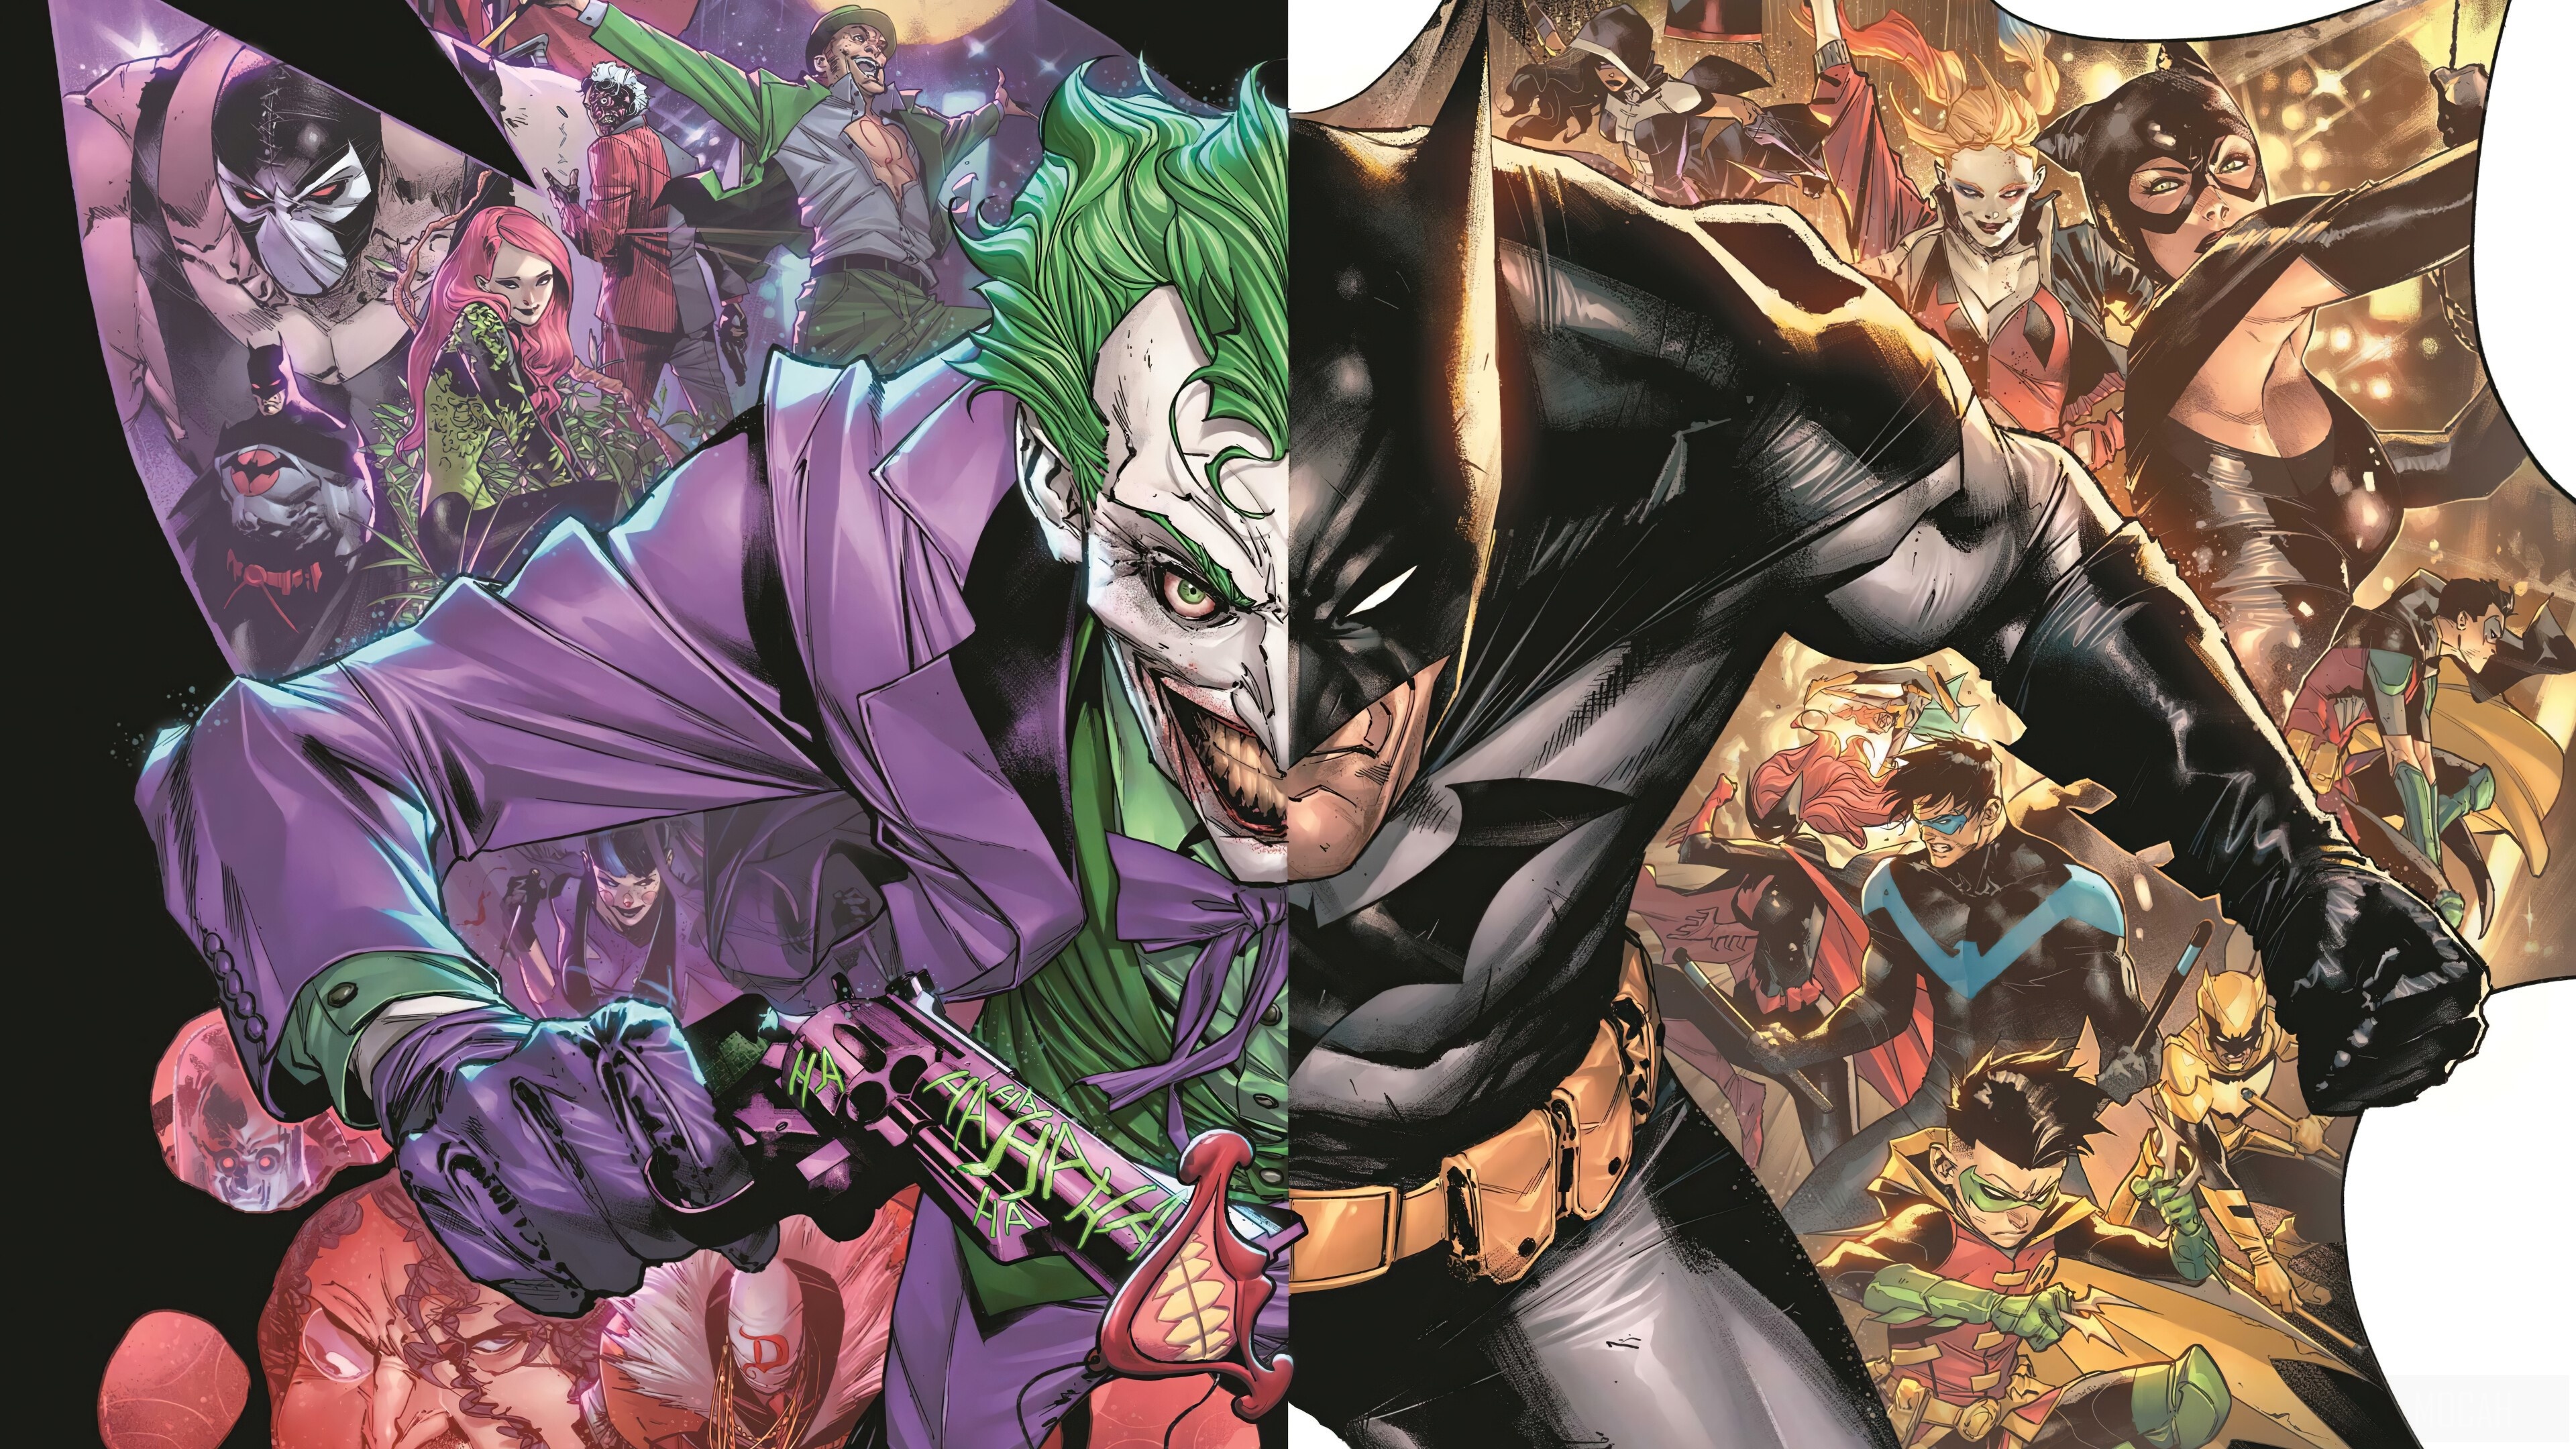 DC Comic book, Collection of Characters, Artistic array, Superhero lineup, Striking vibrancy, 3840x2160 4K Desktop